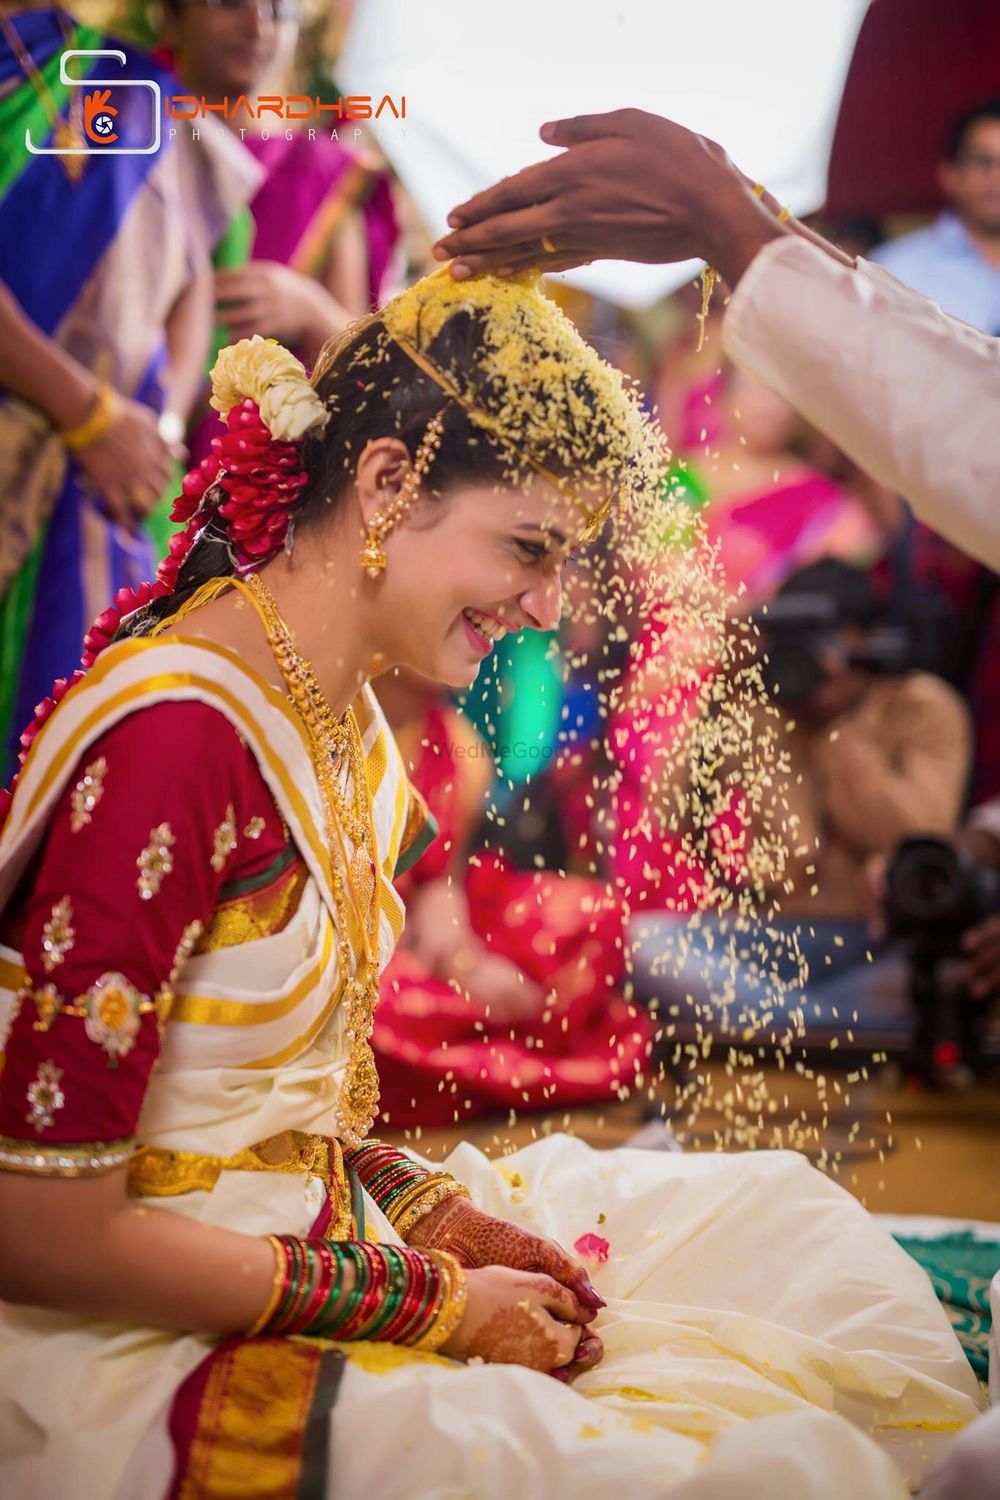 Photo From Sravani weds Vishnu - By Sidhardhsai Photography